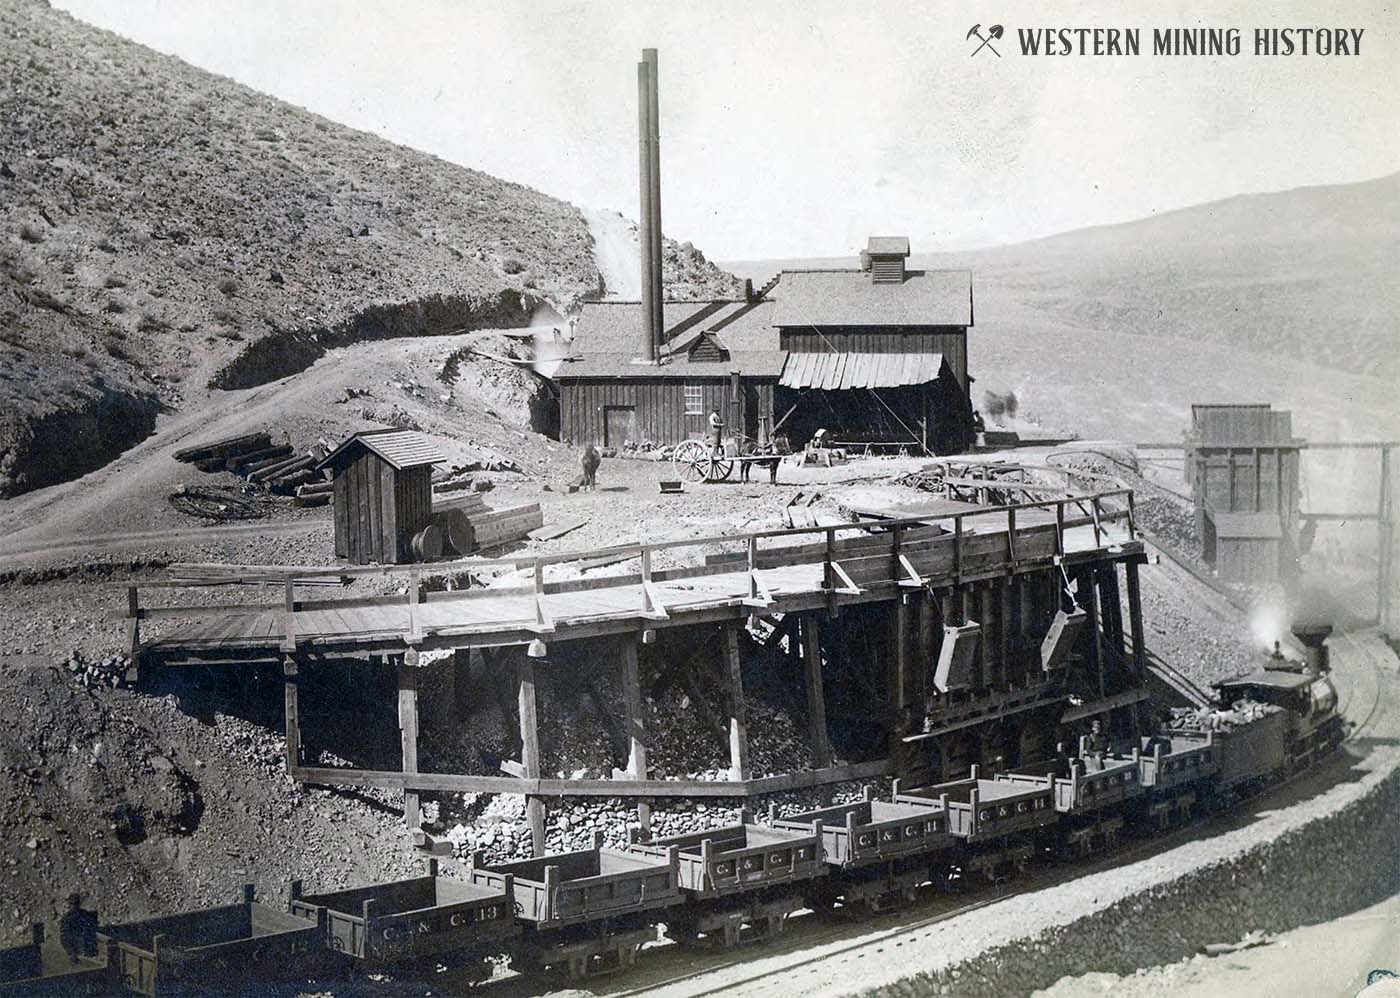 Northern Belle Mine at Candelaria, Nevada ca. 1880